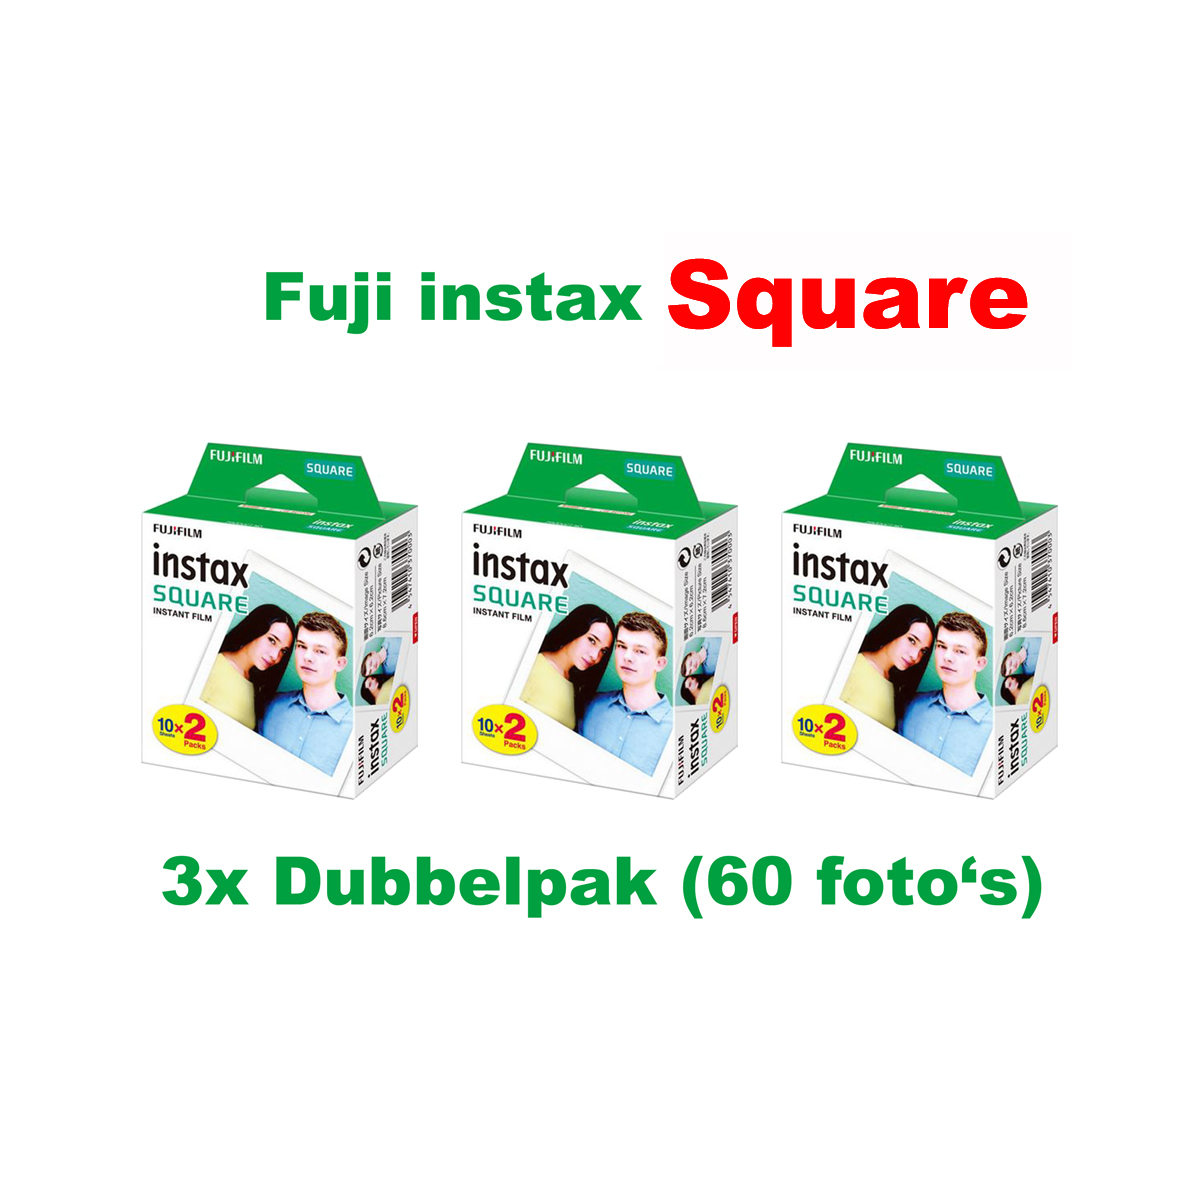 enthousiast eetlust klif 5x Fuji Instax Square instant film dubbelpak (100 foto's)